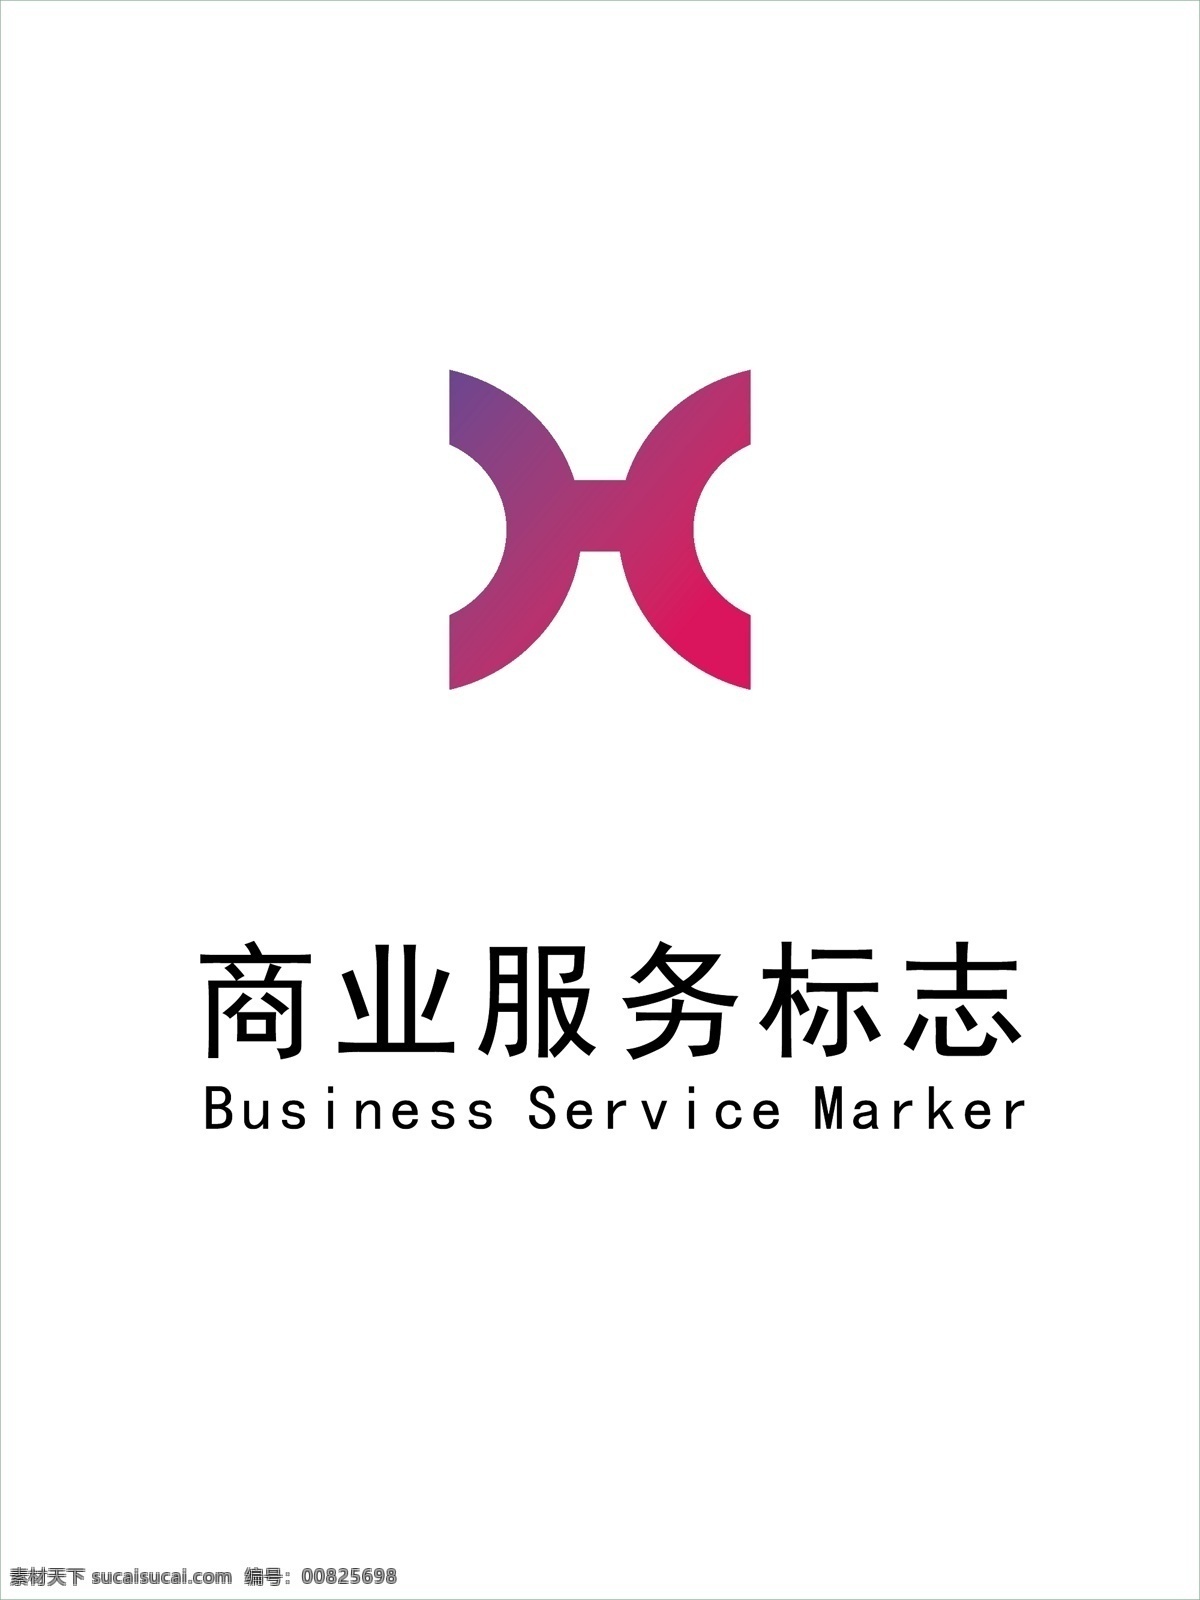 商业 logox 字母 logo 商业logo x 服装logo 时尚 商业服务标志 business service marker